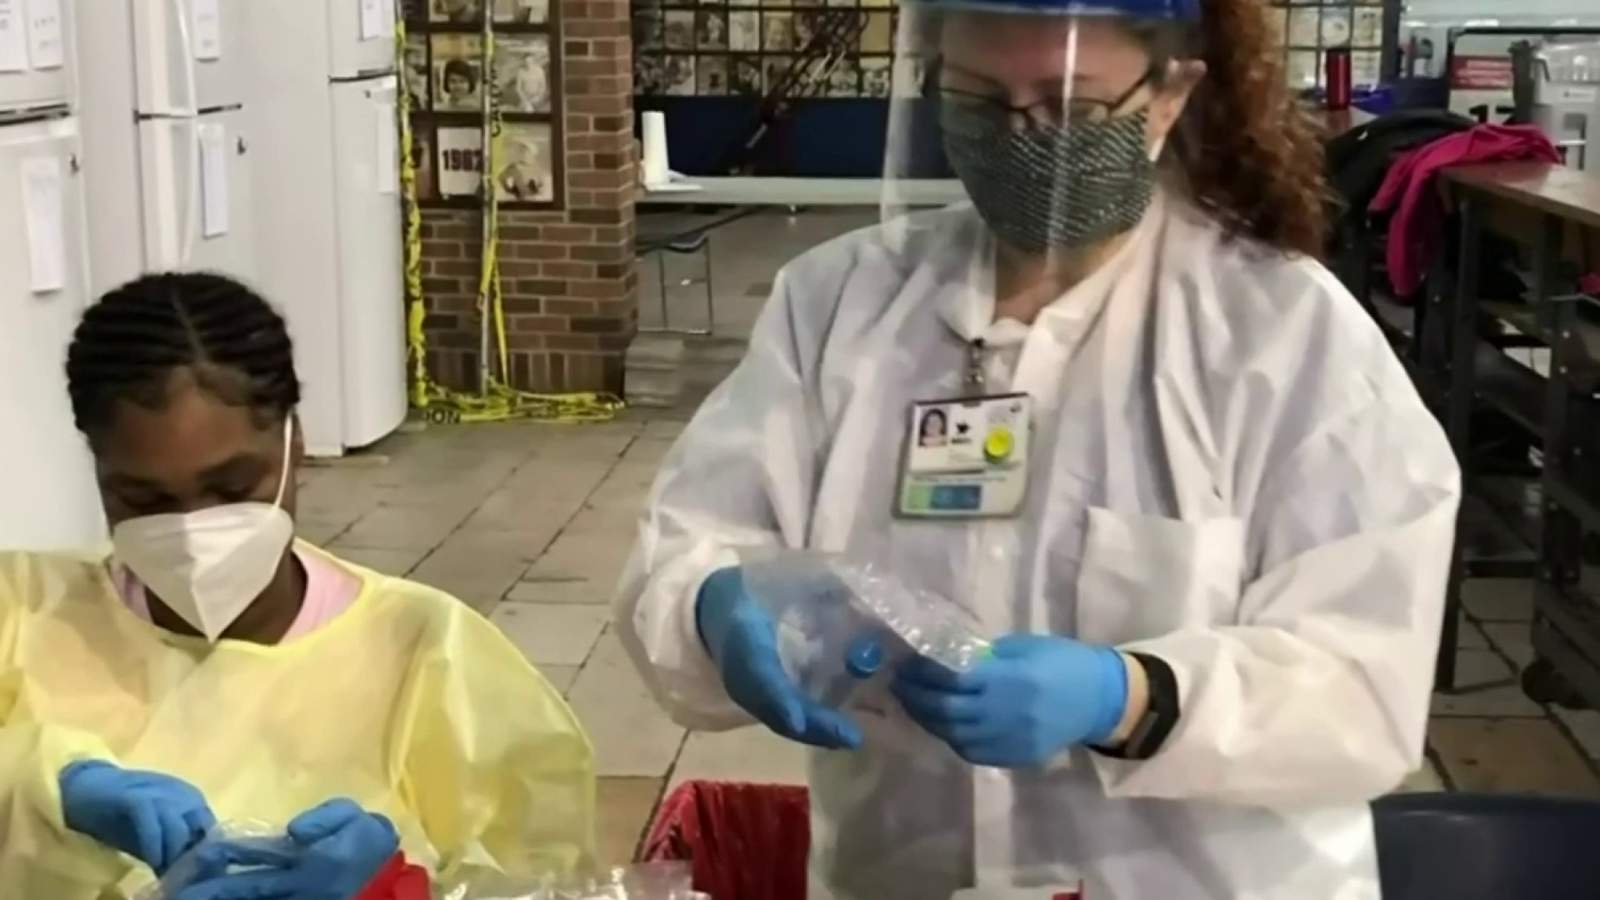 Coronavirus testing site volunteers share reasons for stepping up